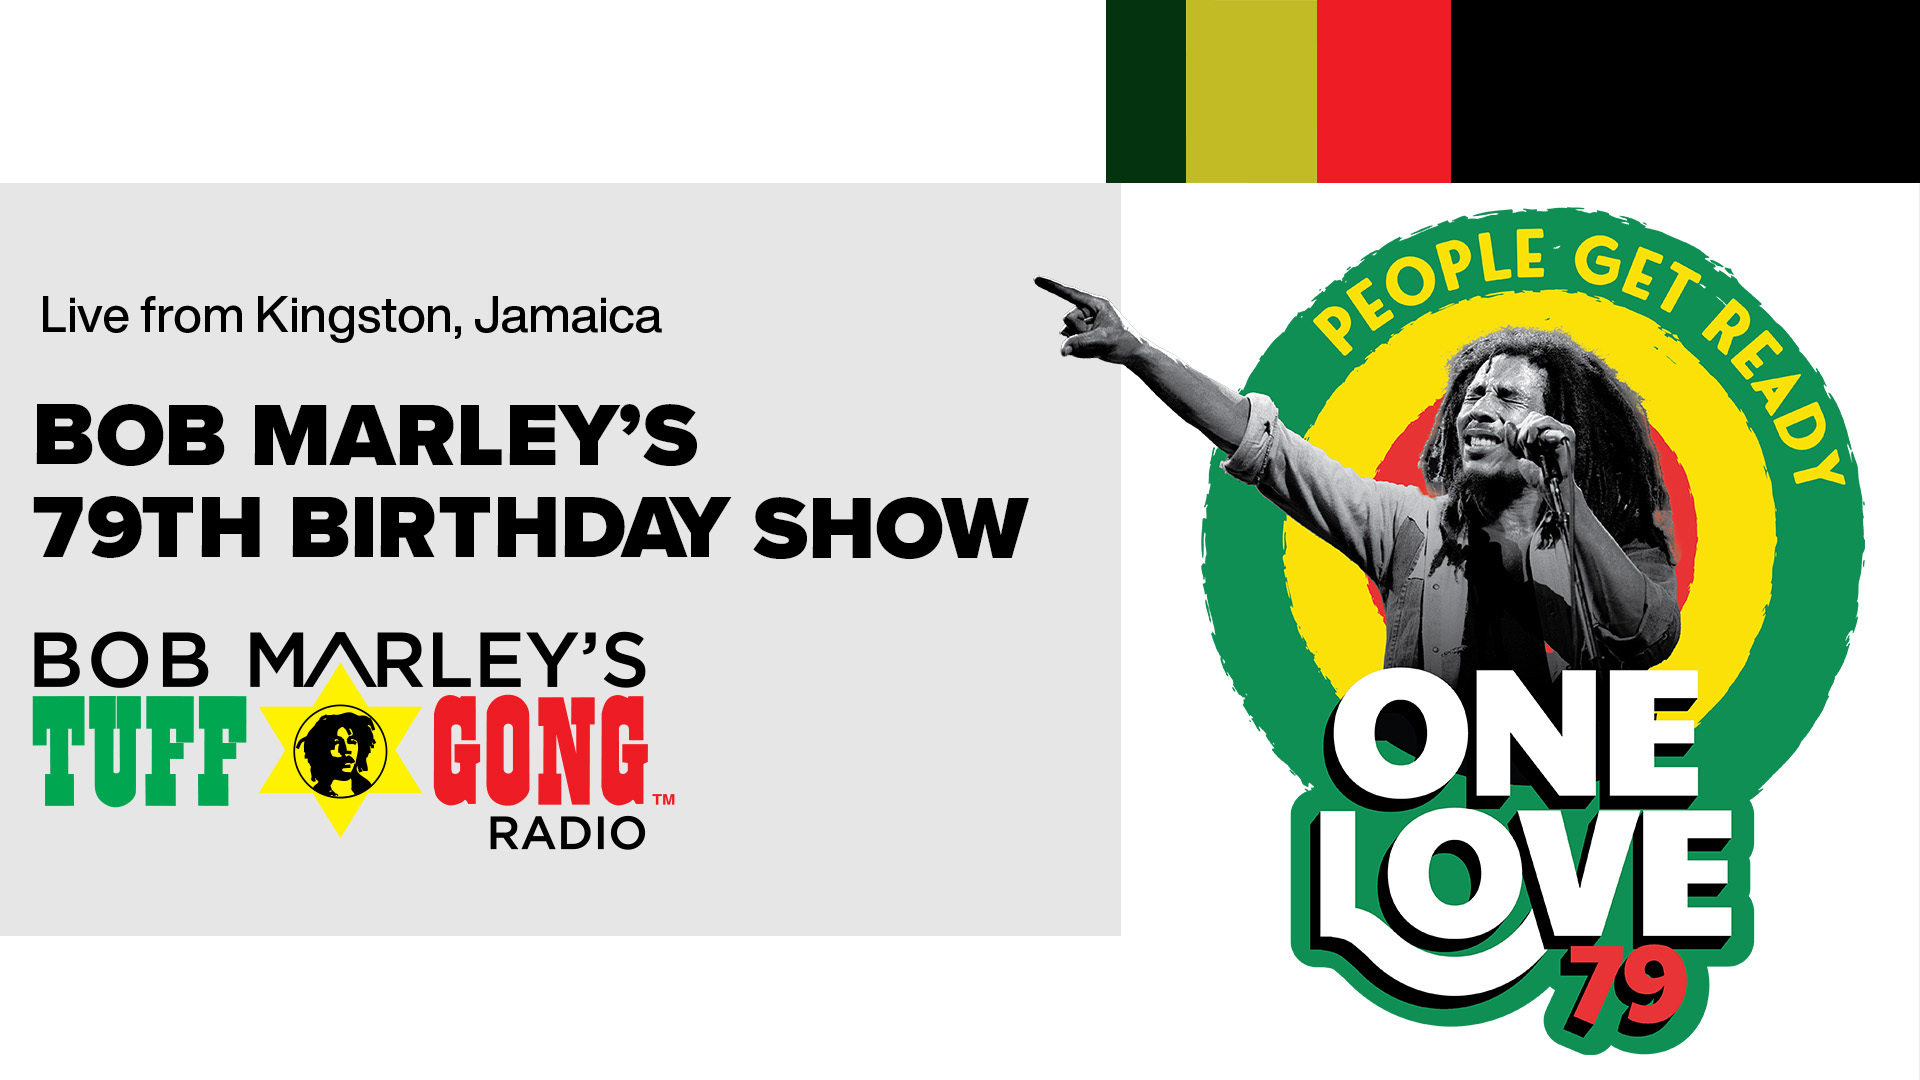 Bob Marley's 79th Birthday Tribute Show on SiriusXM's Bob Marley's Tuff Gong Radio